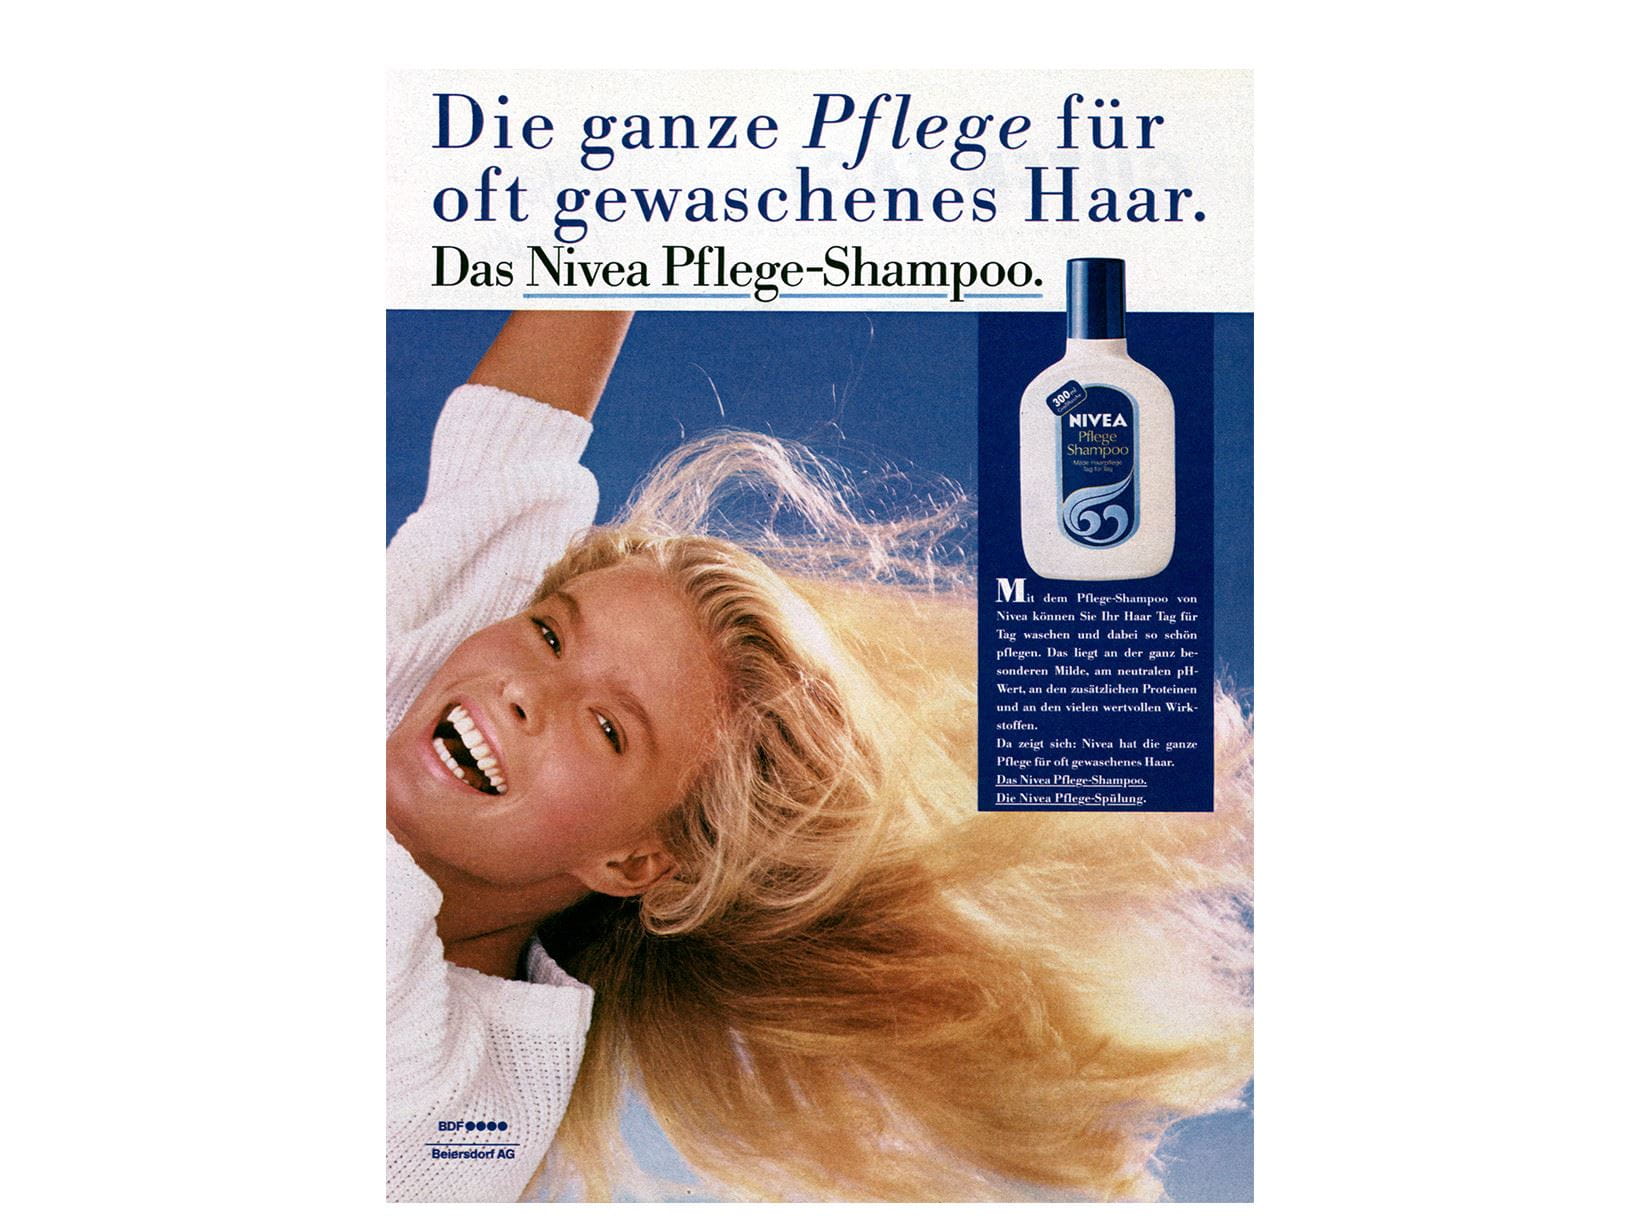 Реклама шампуня для ухода за волосами NIVEA, 1985 г.